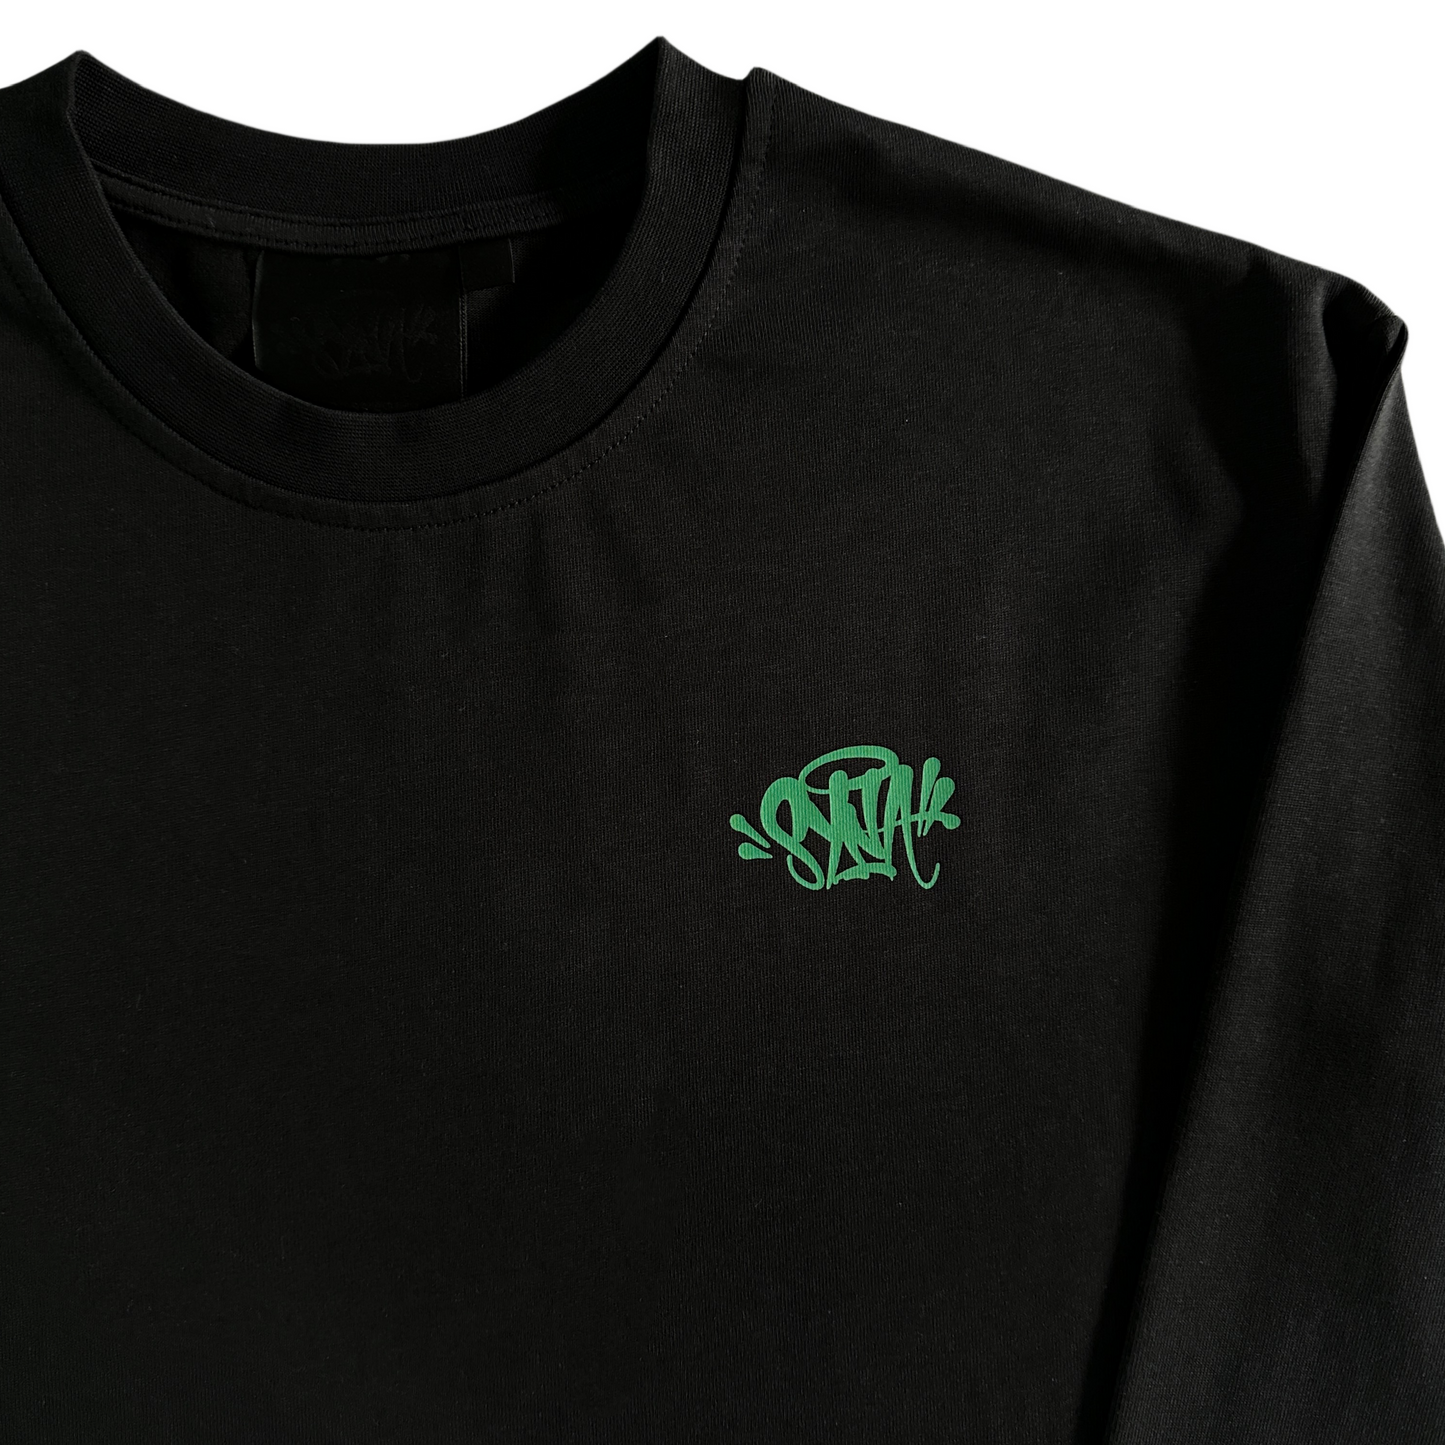 Syna World Rchy Tee Long Sleeves Shirt - Black/Green